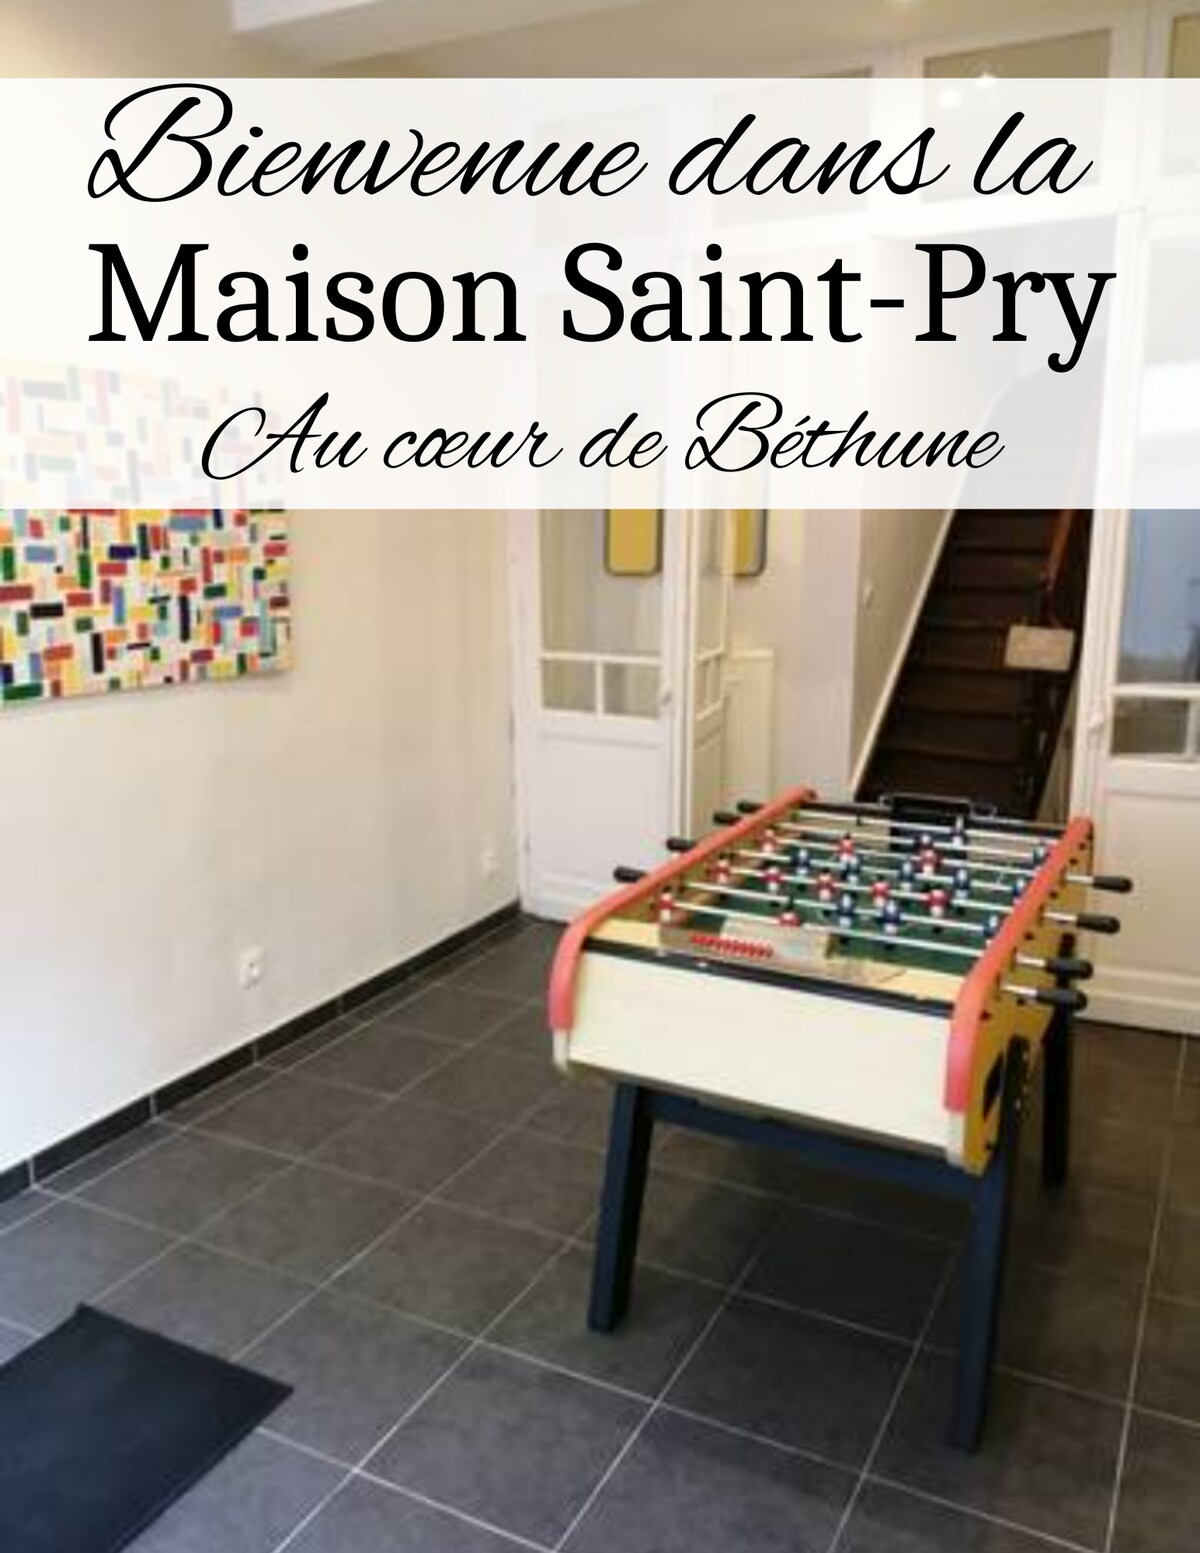 La maison Saint-Pry -hyper center-Sleep in Béthune